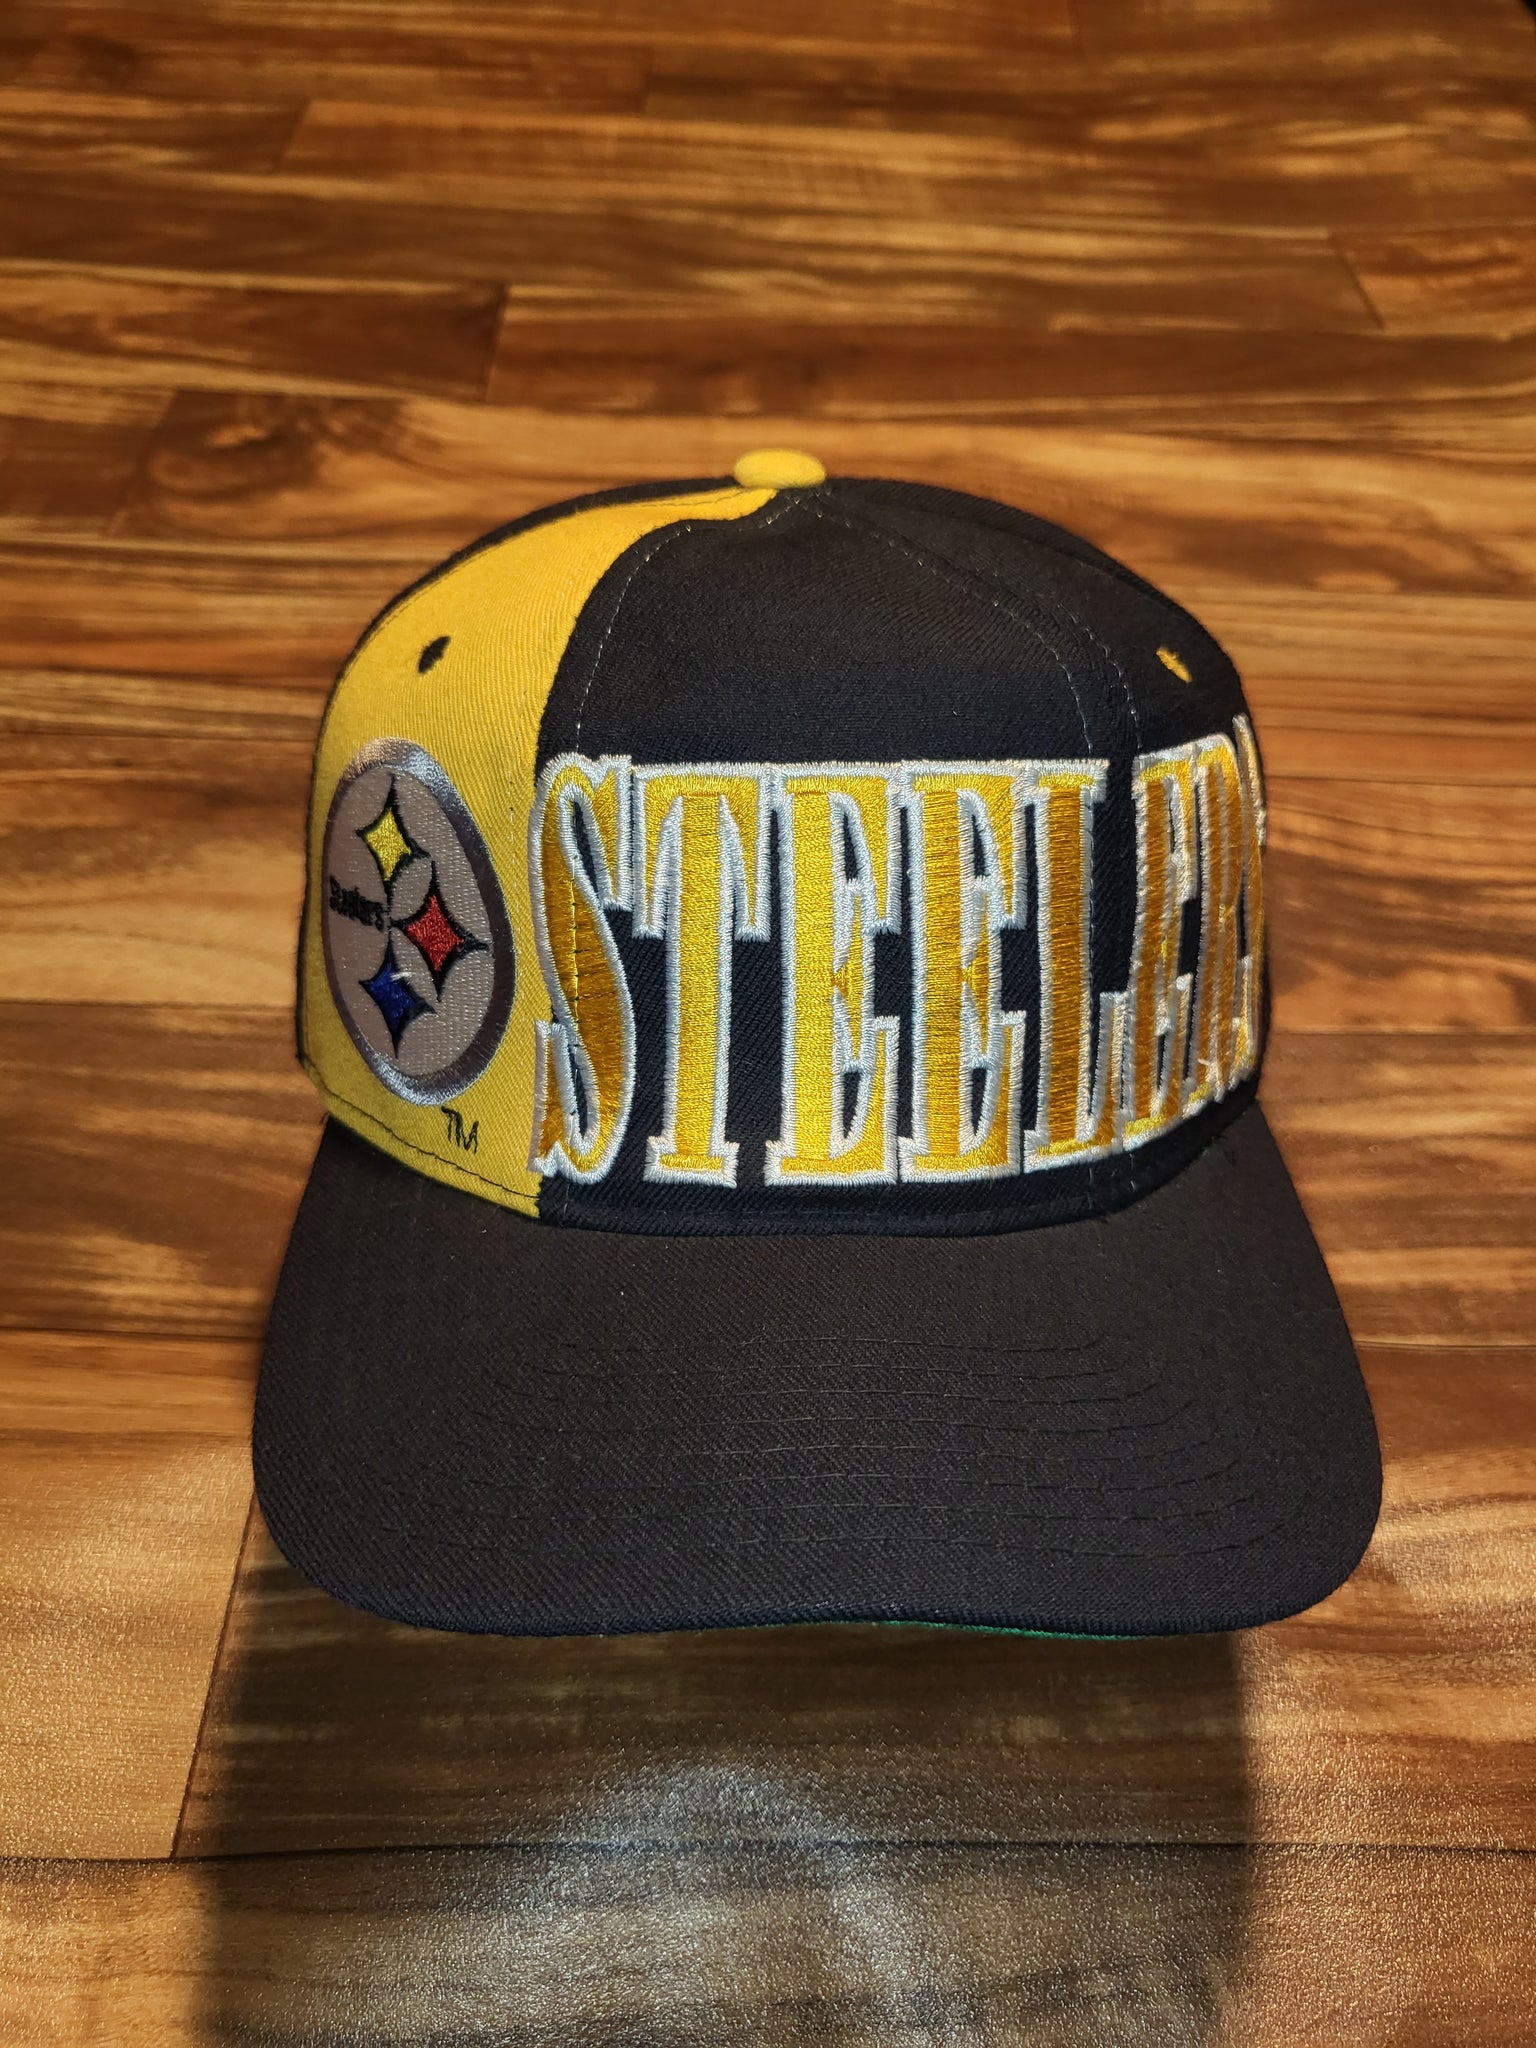 steelers caps